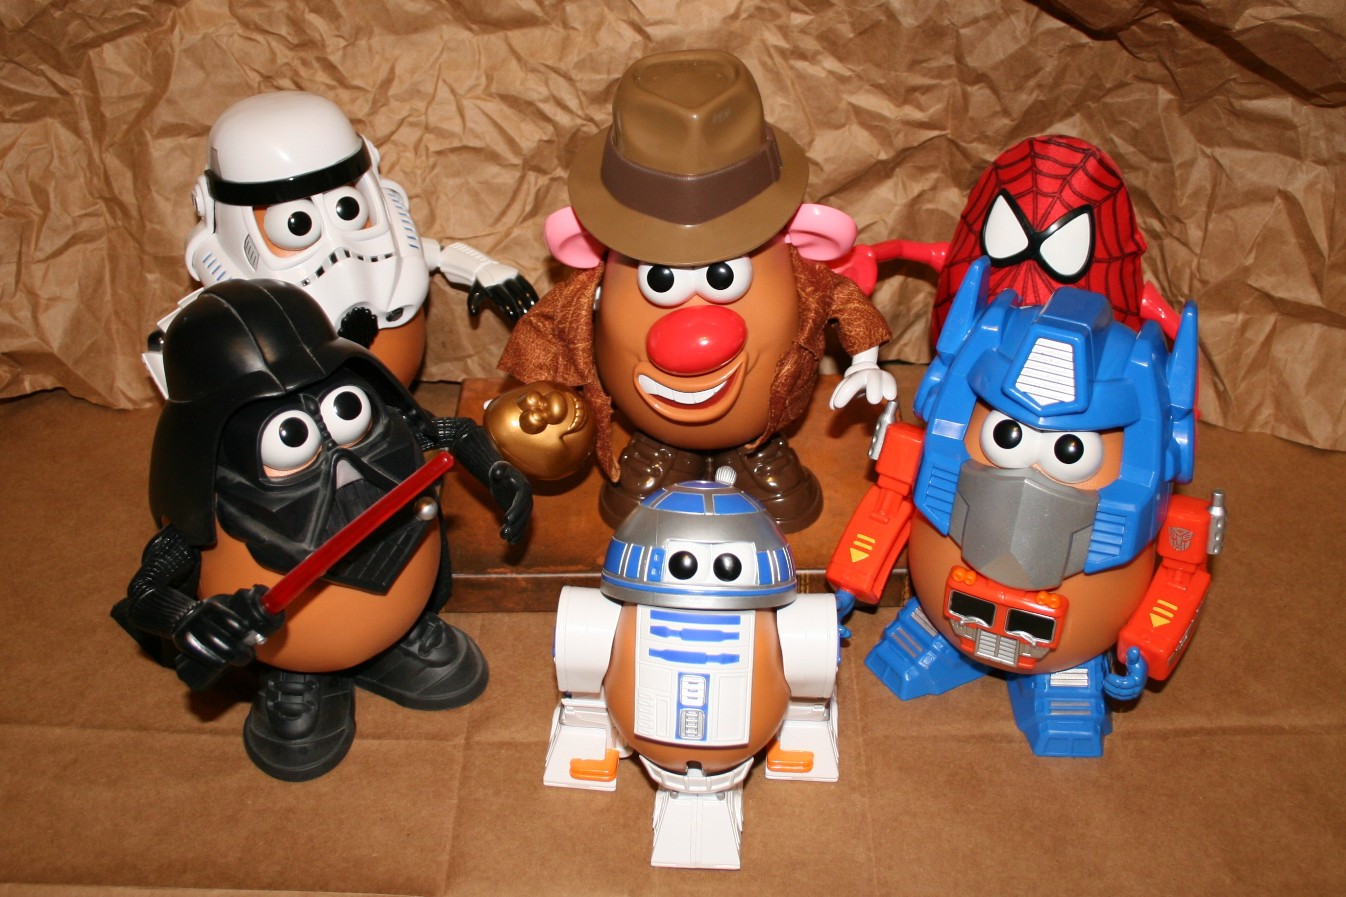 Disney Mr Potato Head - Taters of the Lost Ark